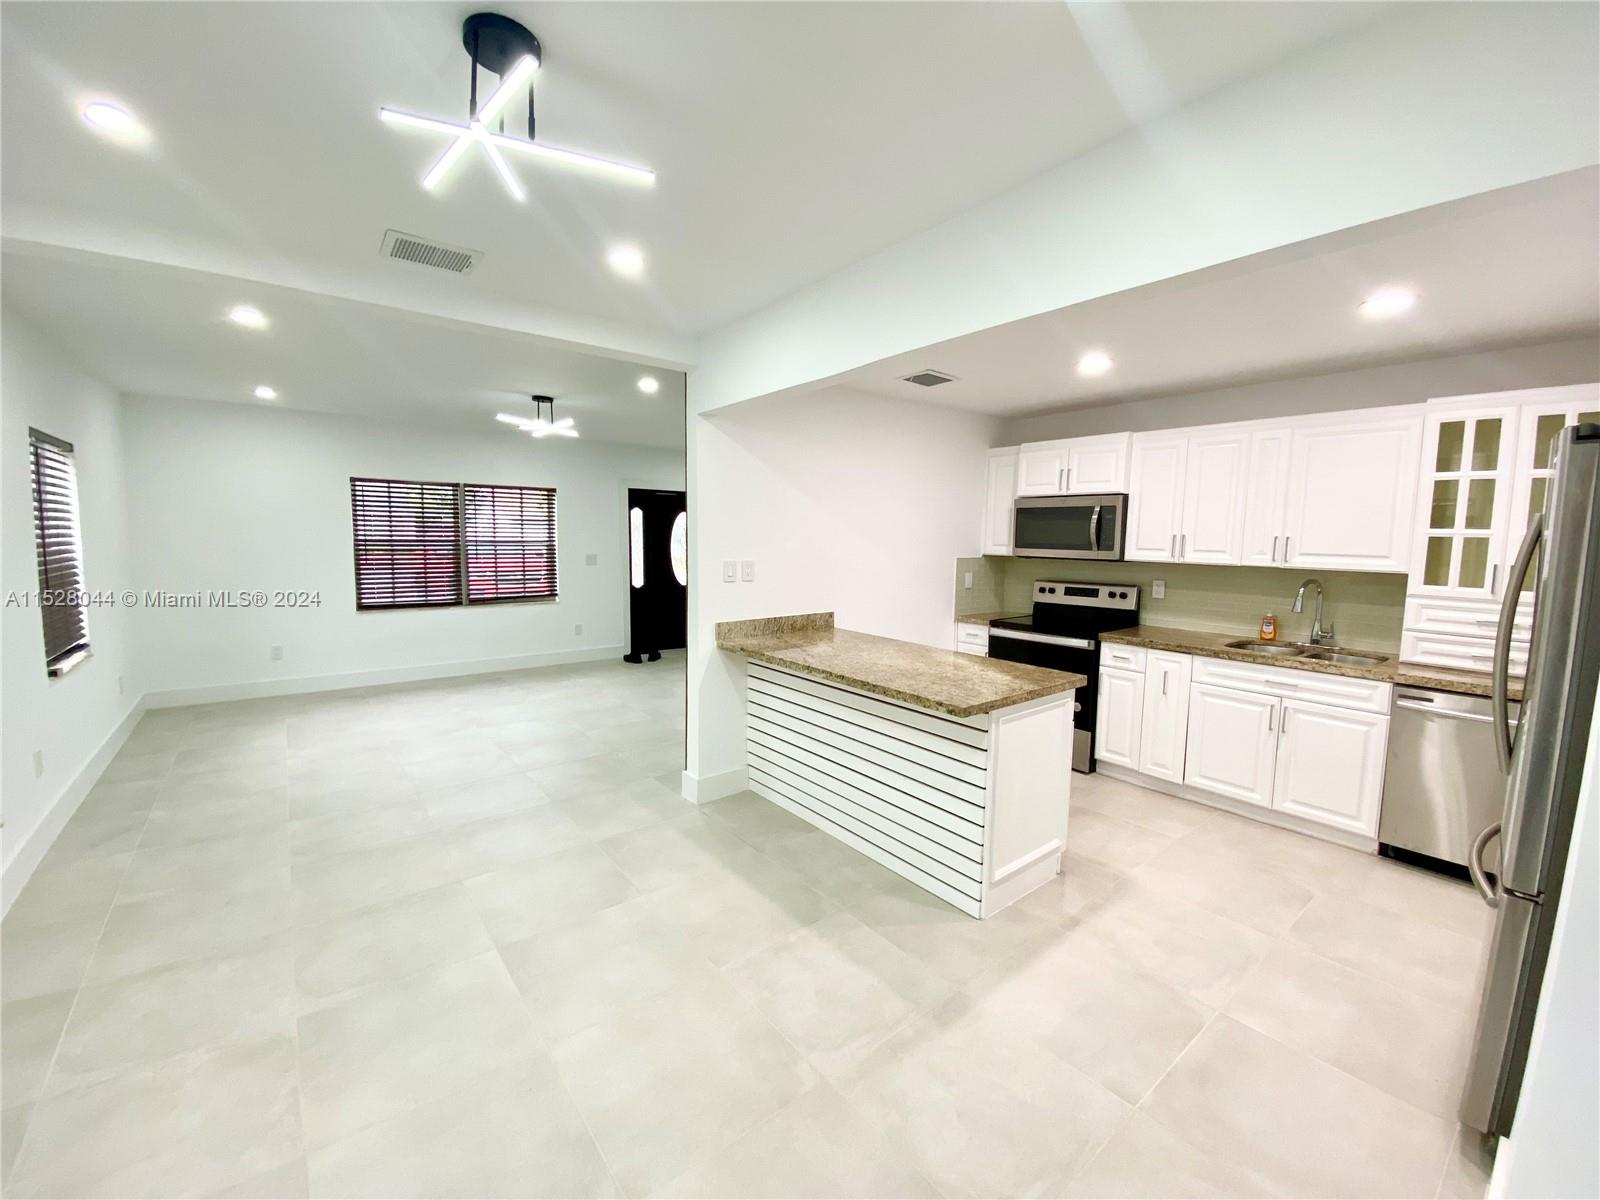 Property for Sale at 340 Tamiami Blvd Blvd, Miami, Broward County, Florida - Bedrooms: 4 
Bathrooms: 4  - $687,500